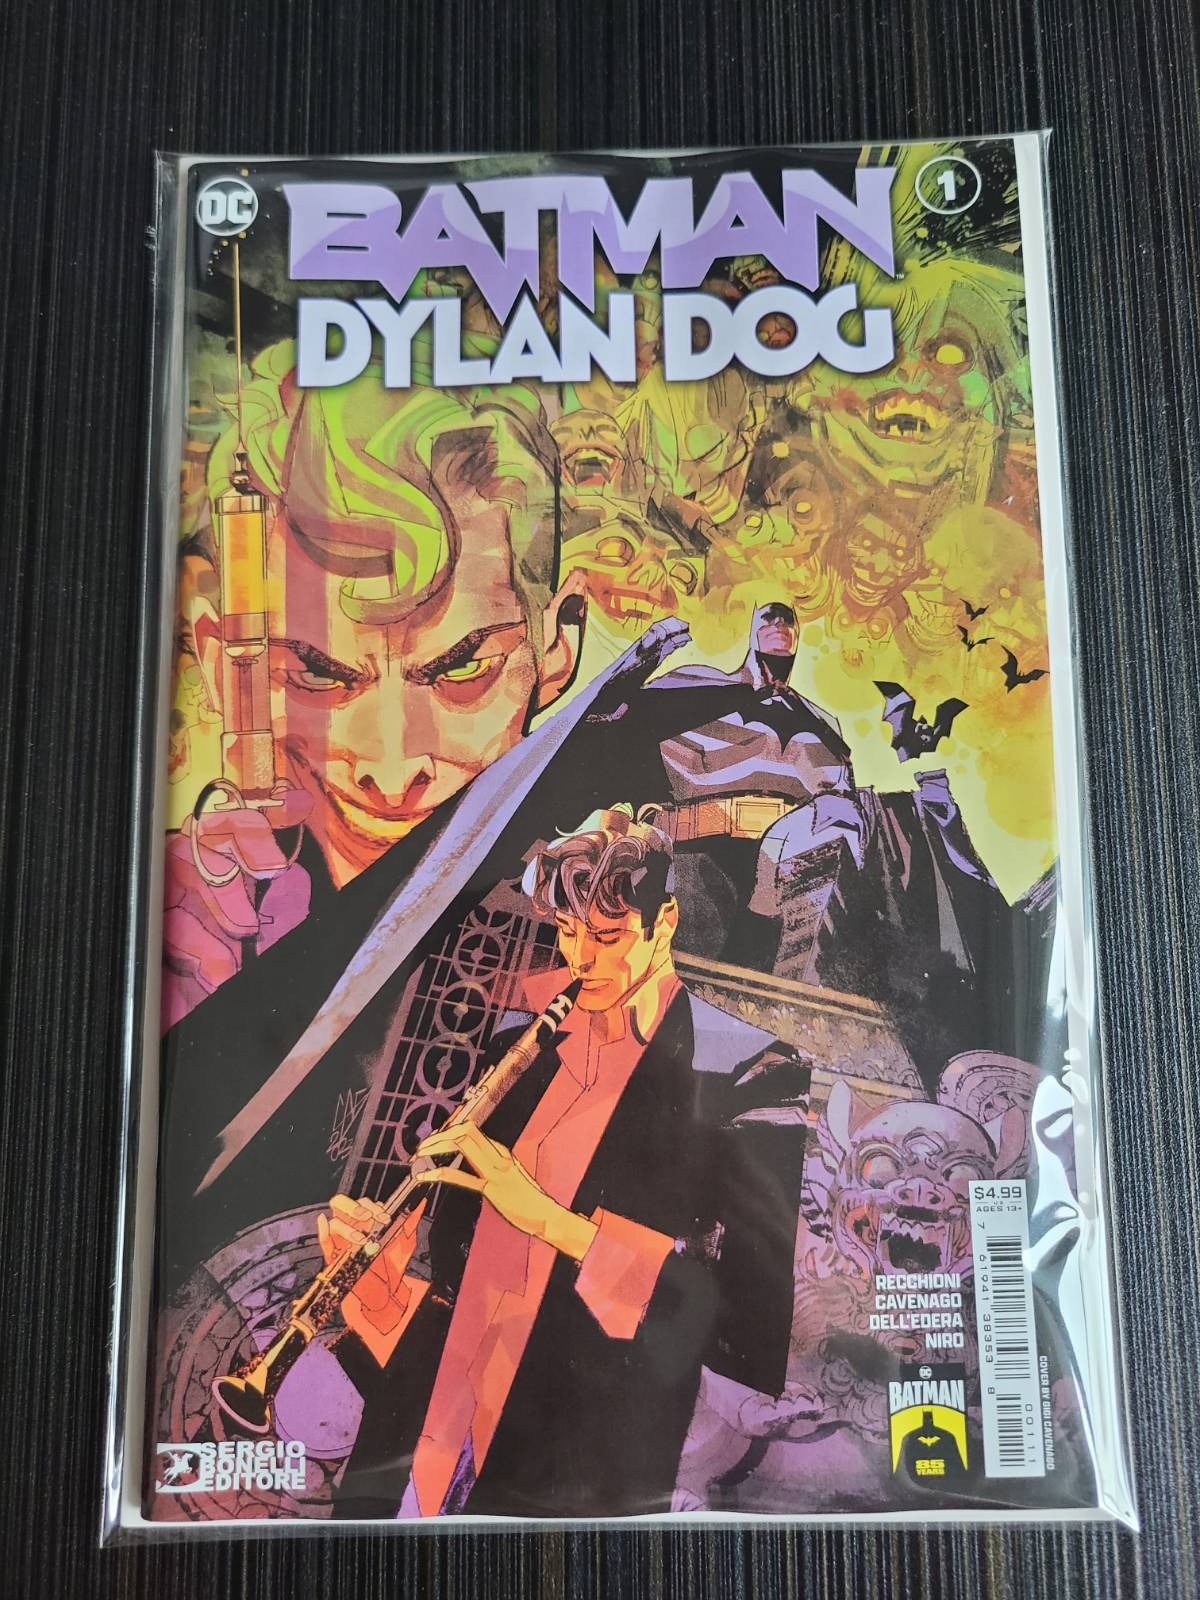 Batman Dylan Dog #1 (of 3) Cover A Gigi Cavenago